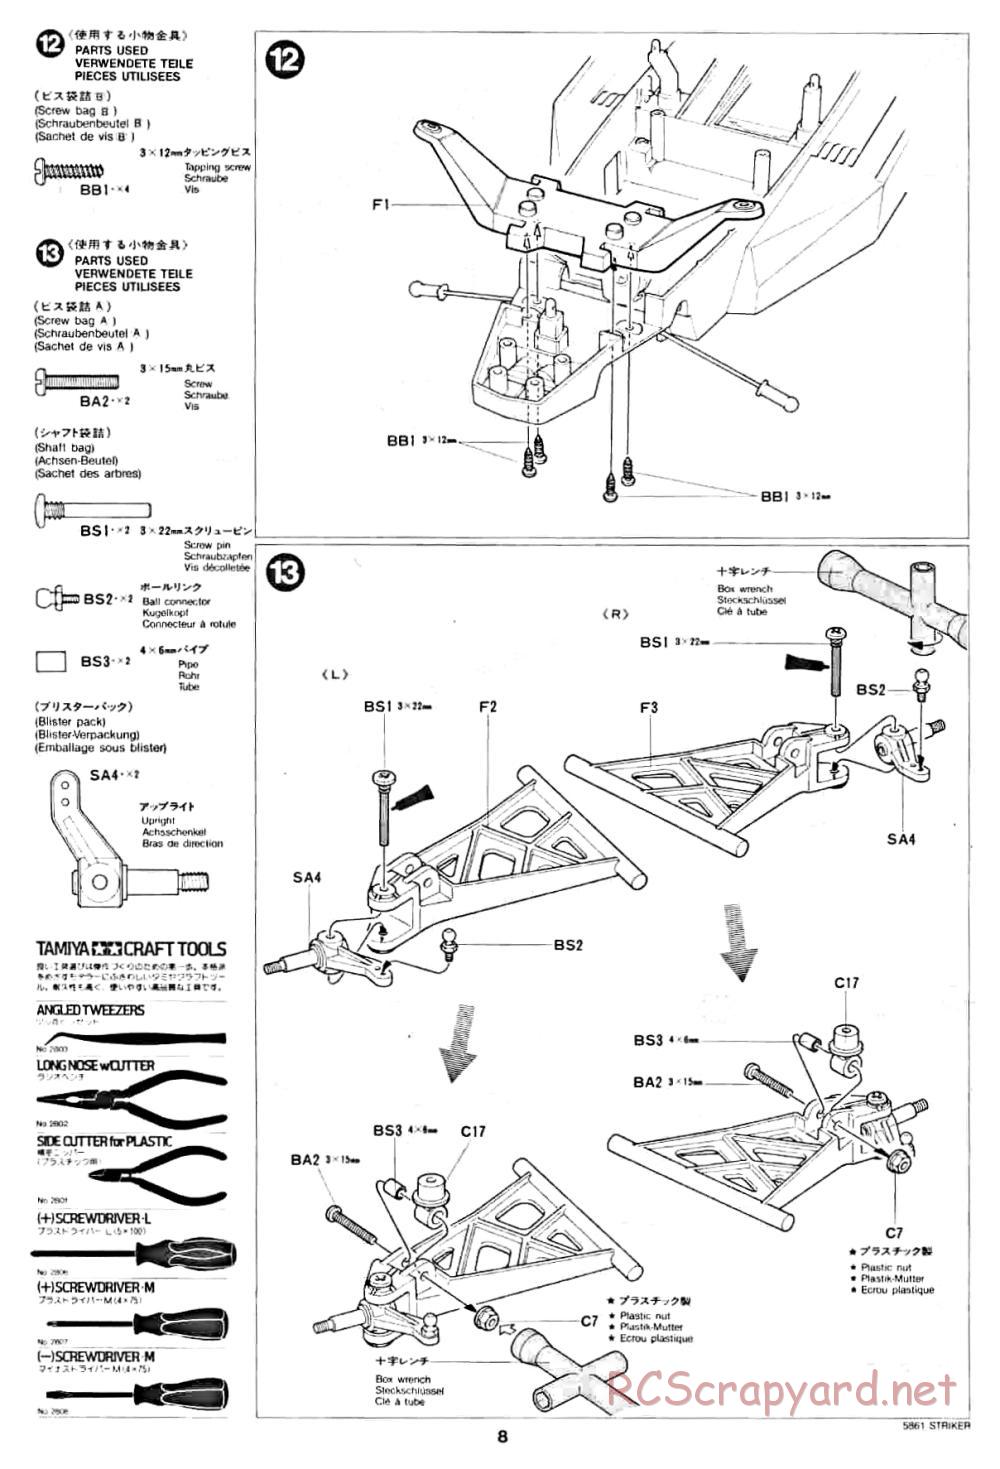 Tamiya - Striker - 58061 - Manual - Page 8